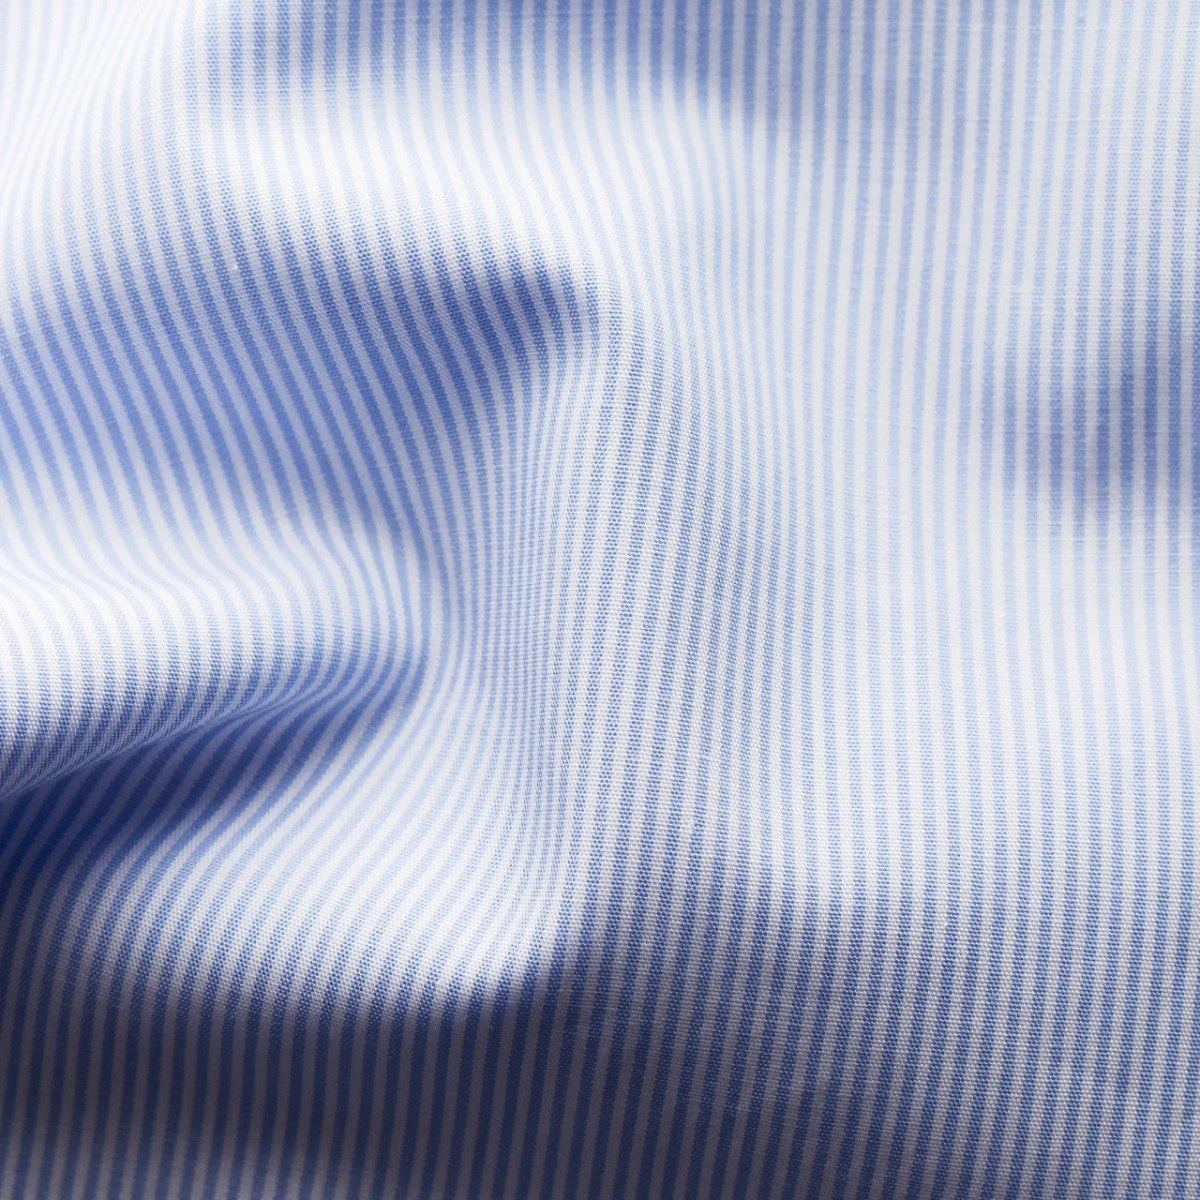 Eton light blue slim fit striped poplin men's dress shirt